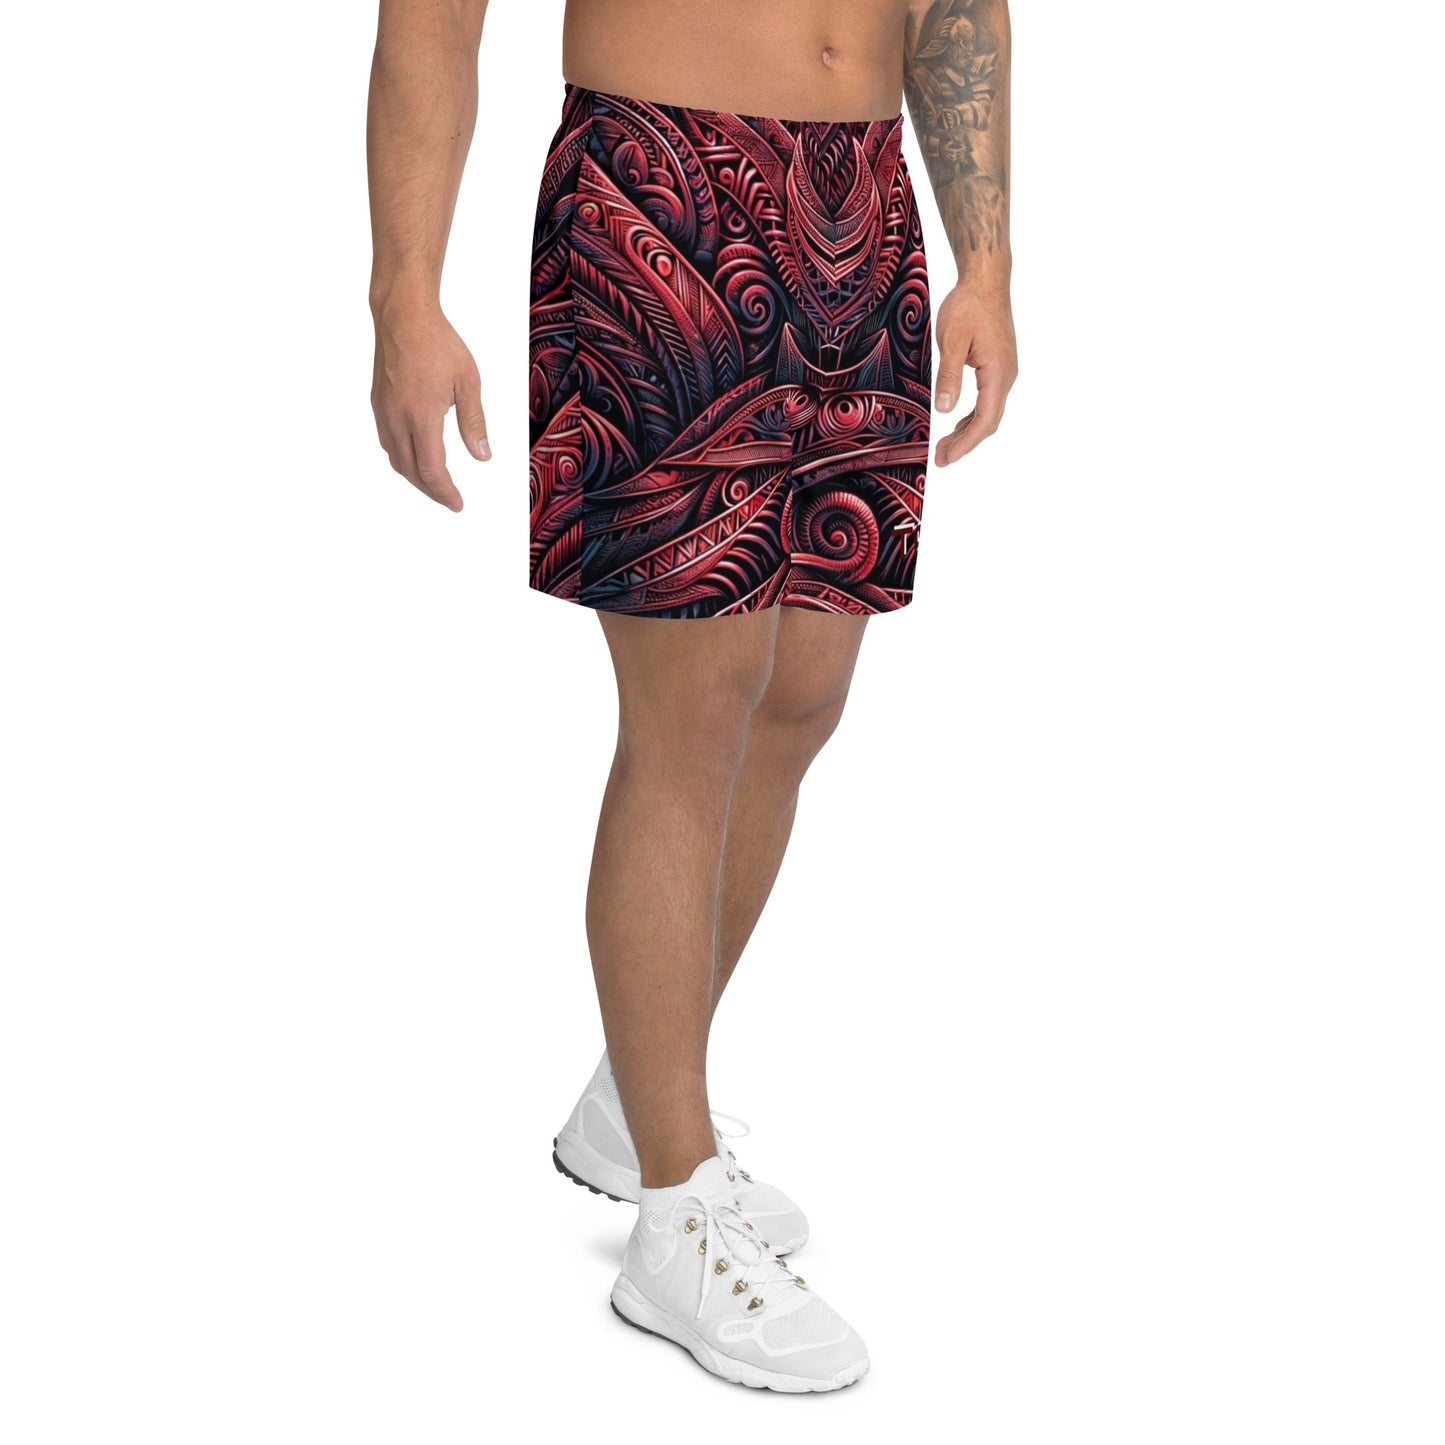 TATB Athletic shorts Tribal